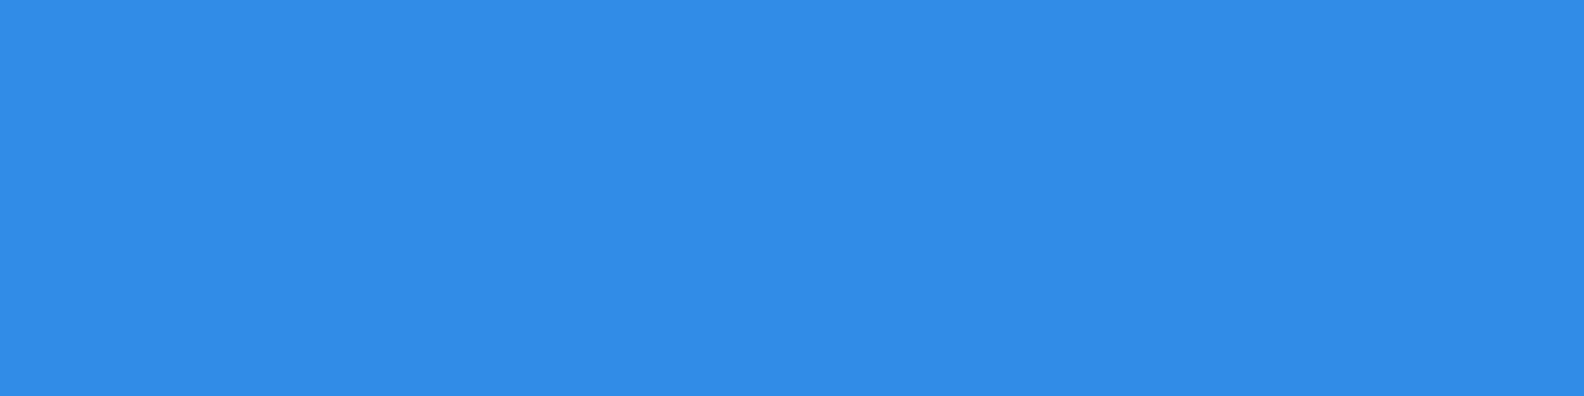 1584x396 Bleu De France Solid Color Background